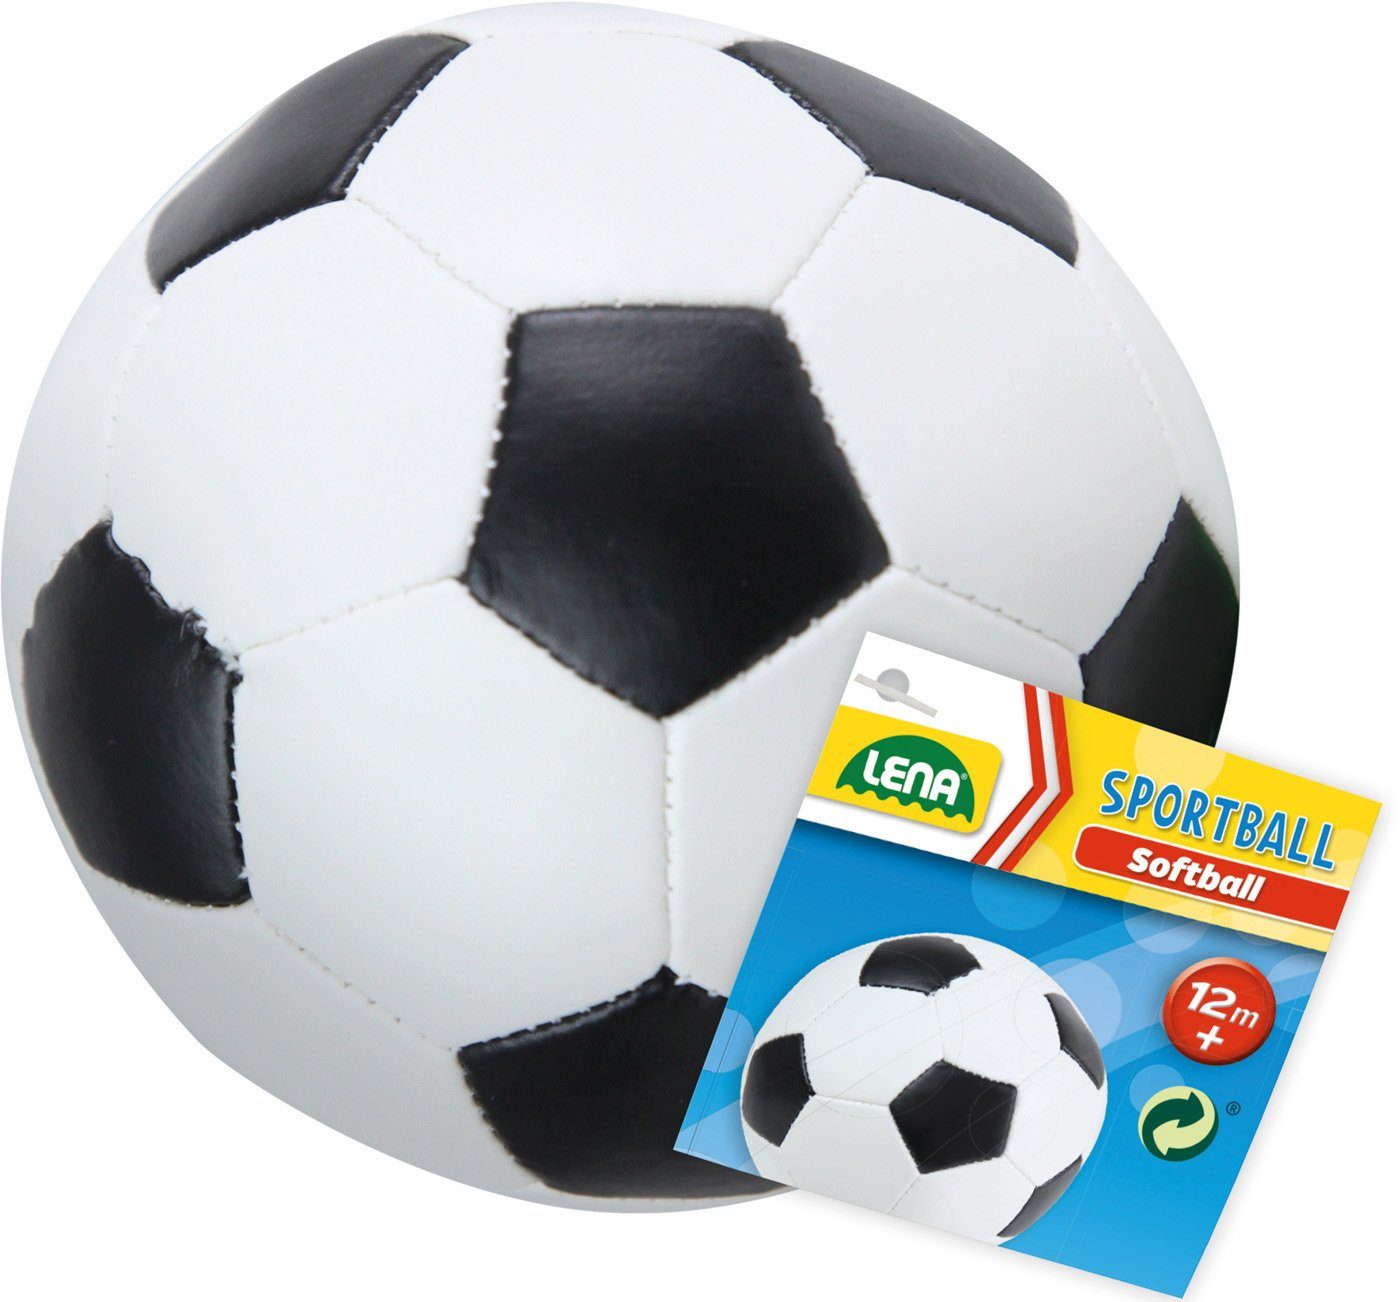 Made cm, Lena® in »Soft-Fußball Ball Soft-Fußball schwarz/weiß« schwarz/weiß, cm, Softball 18 18 Europe,